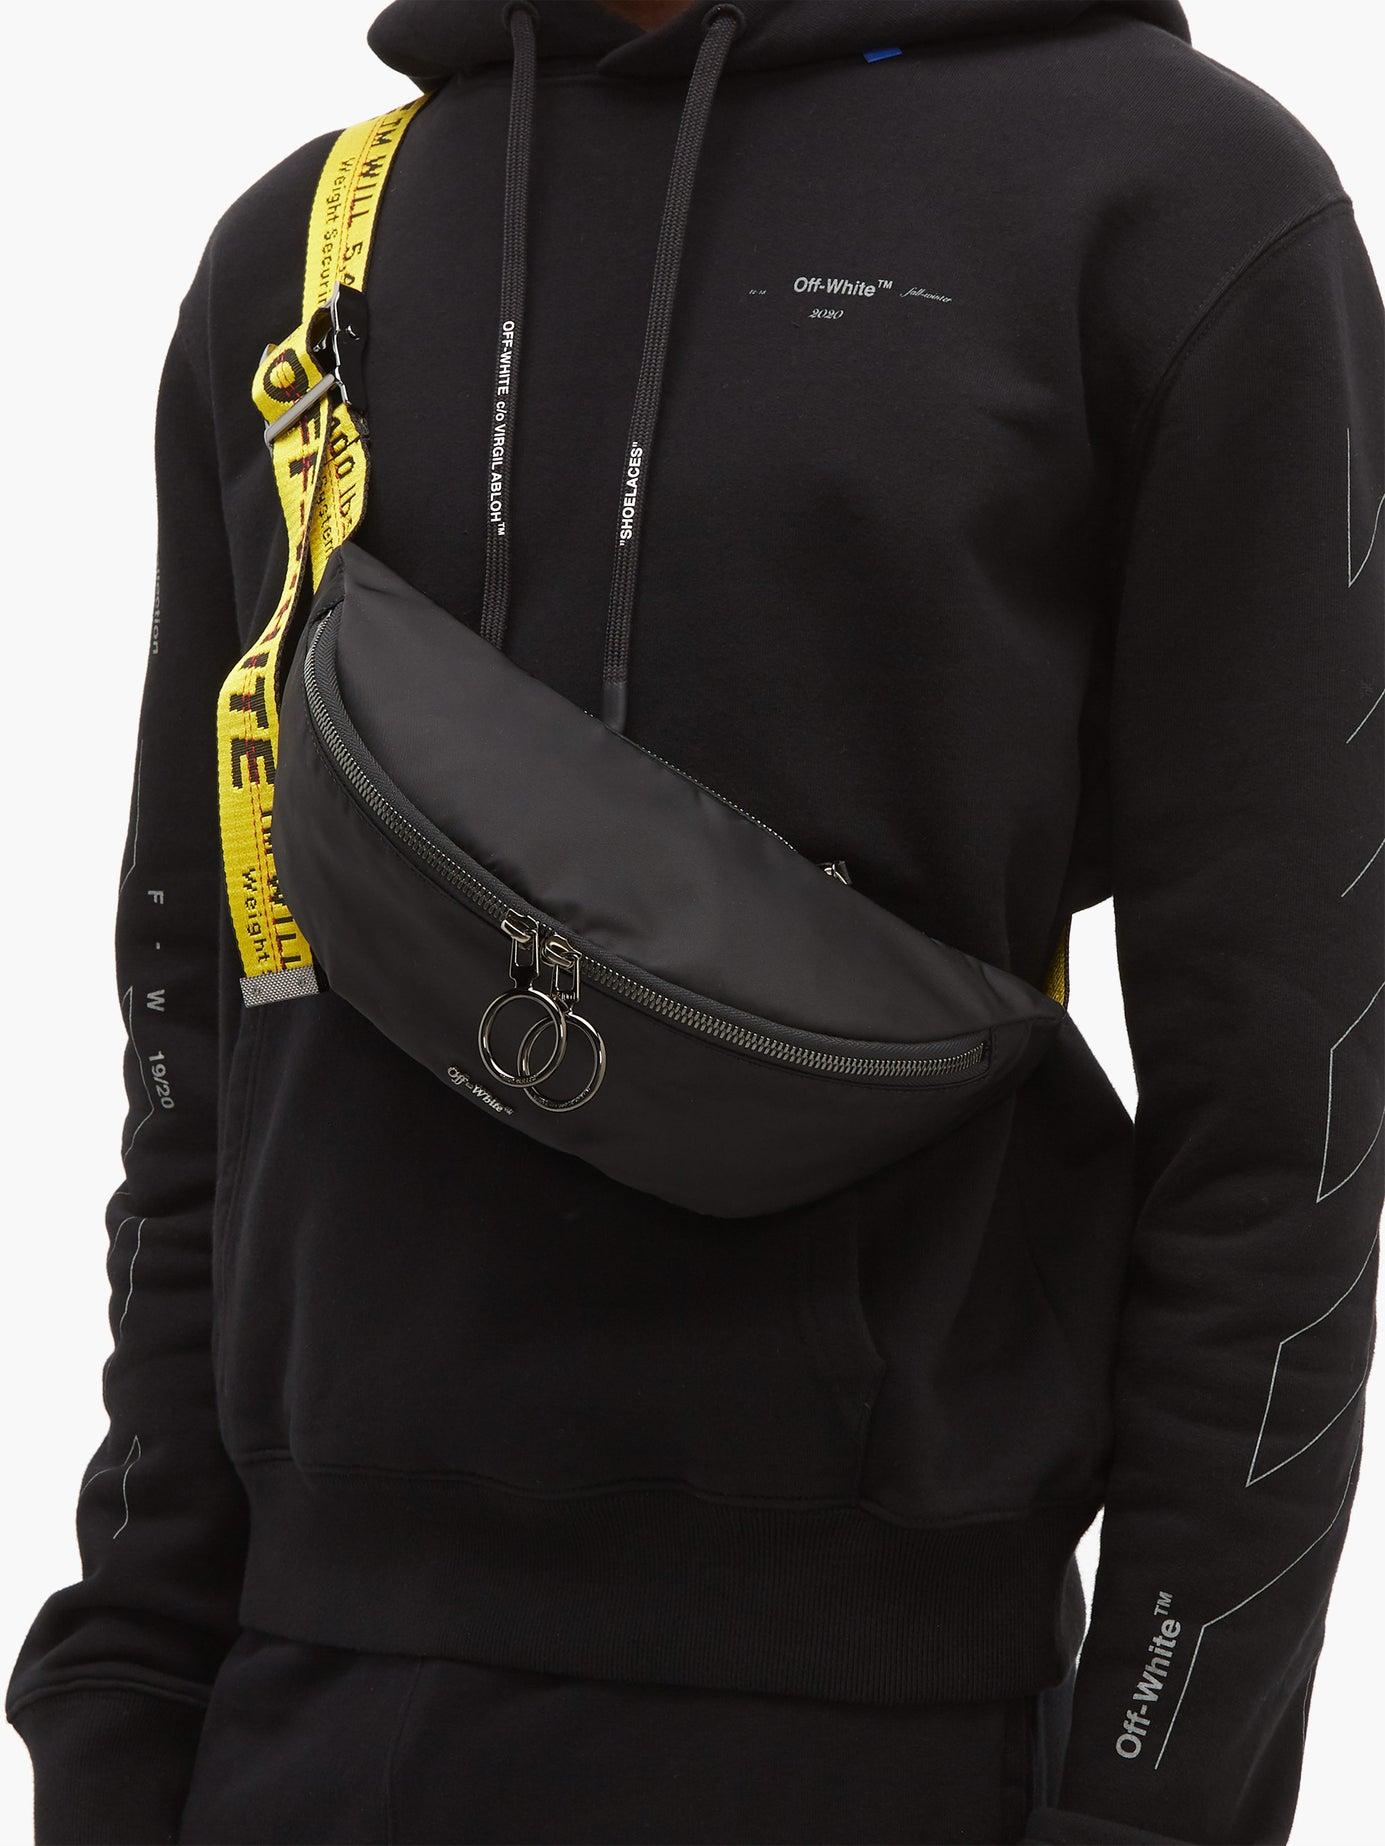 Off-White c/o Virgil Abloh Synthetic Industrial Strap Belt Bag in Black